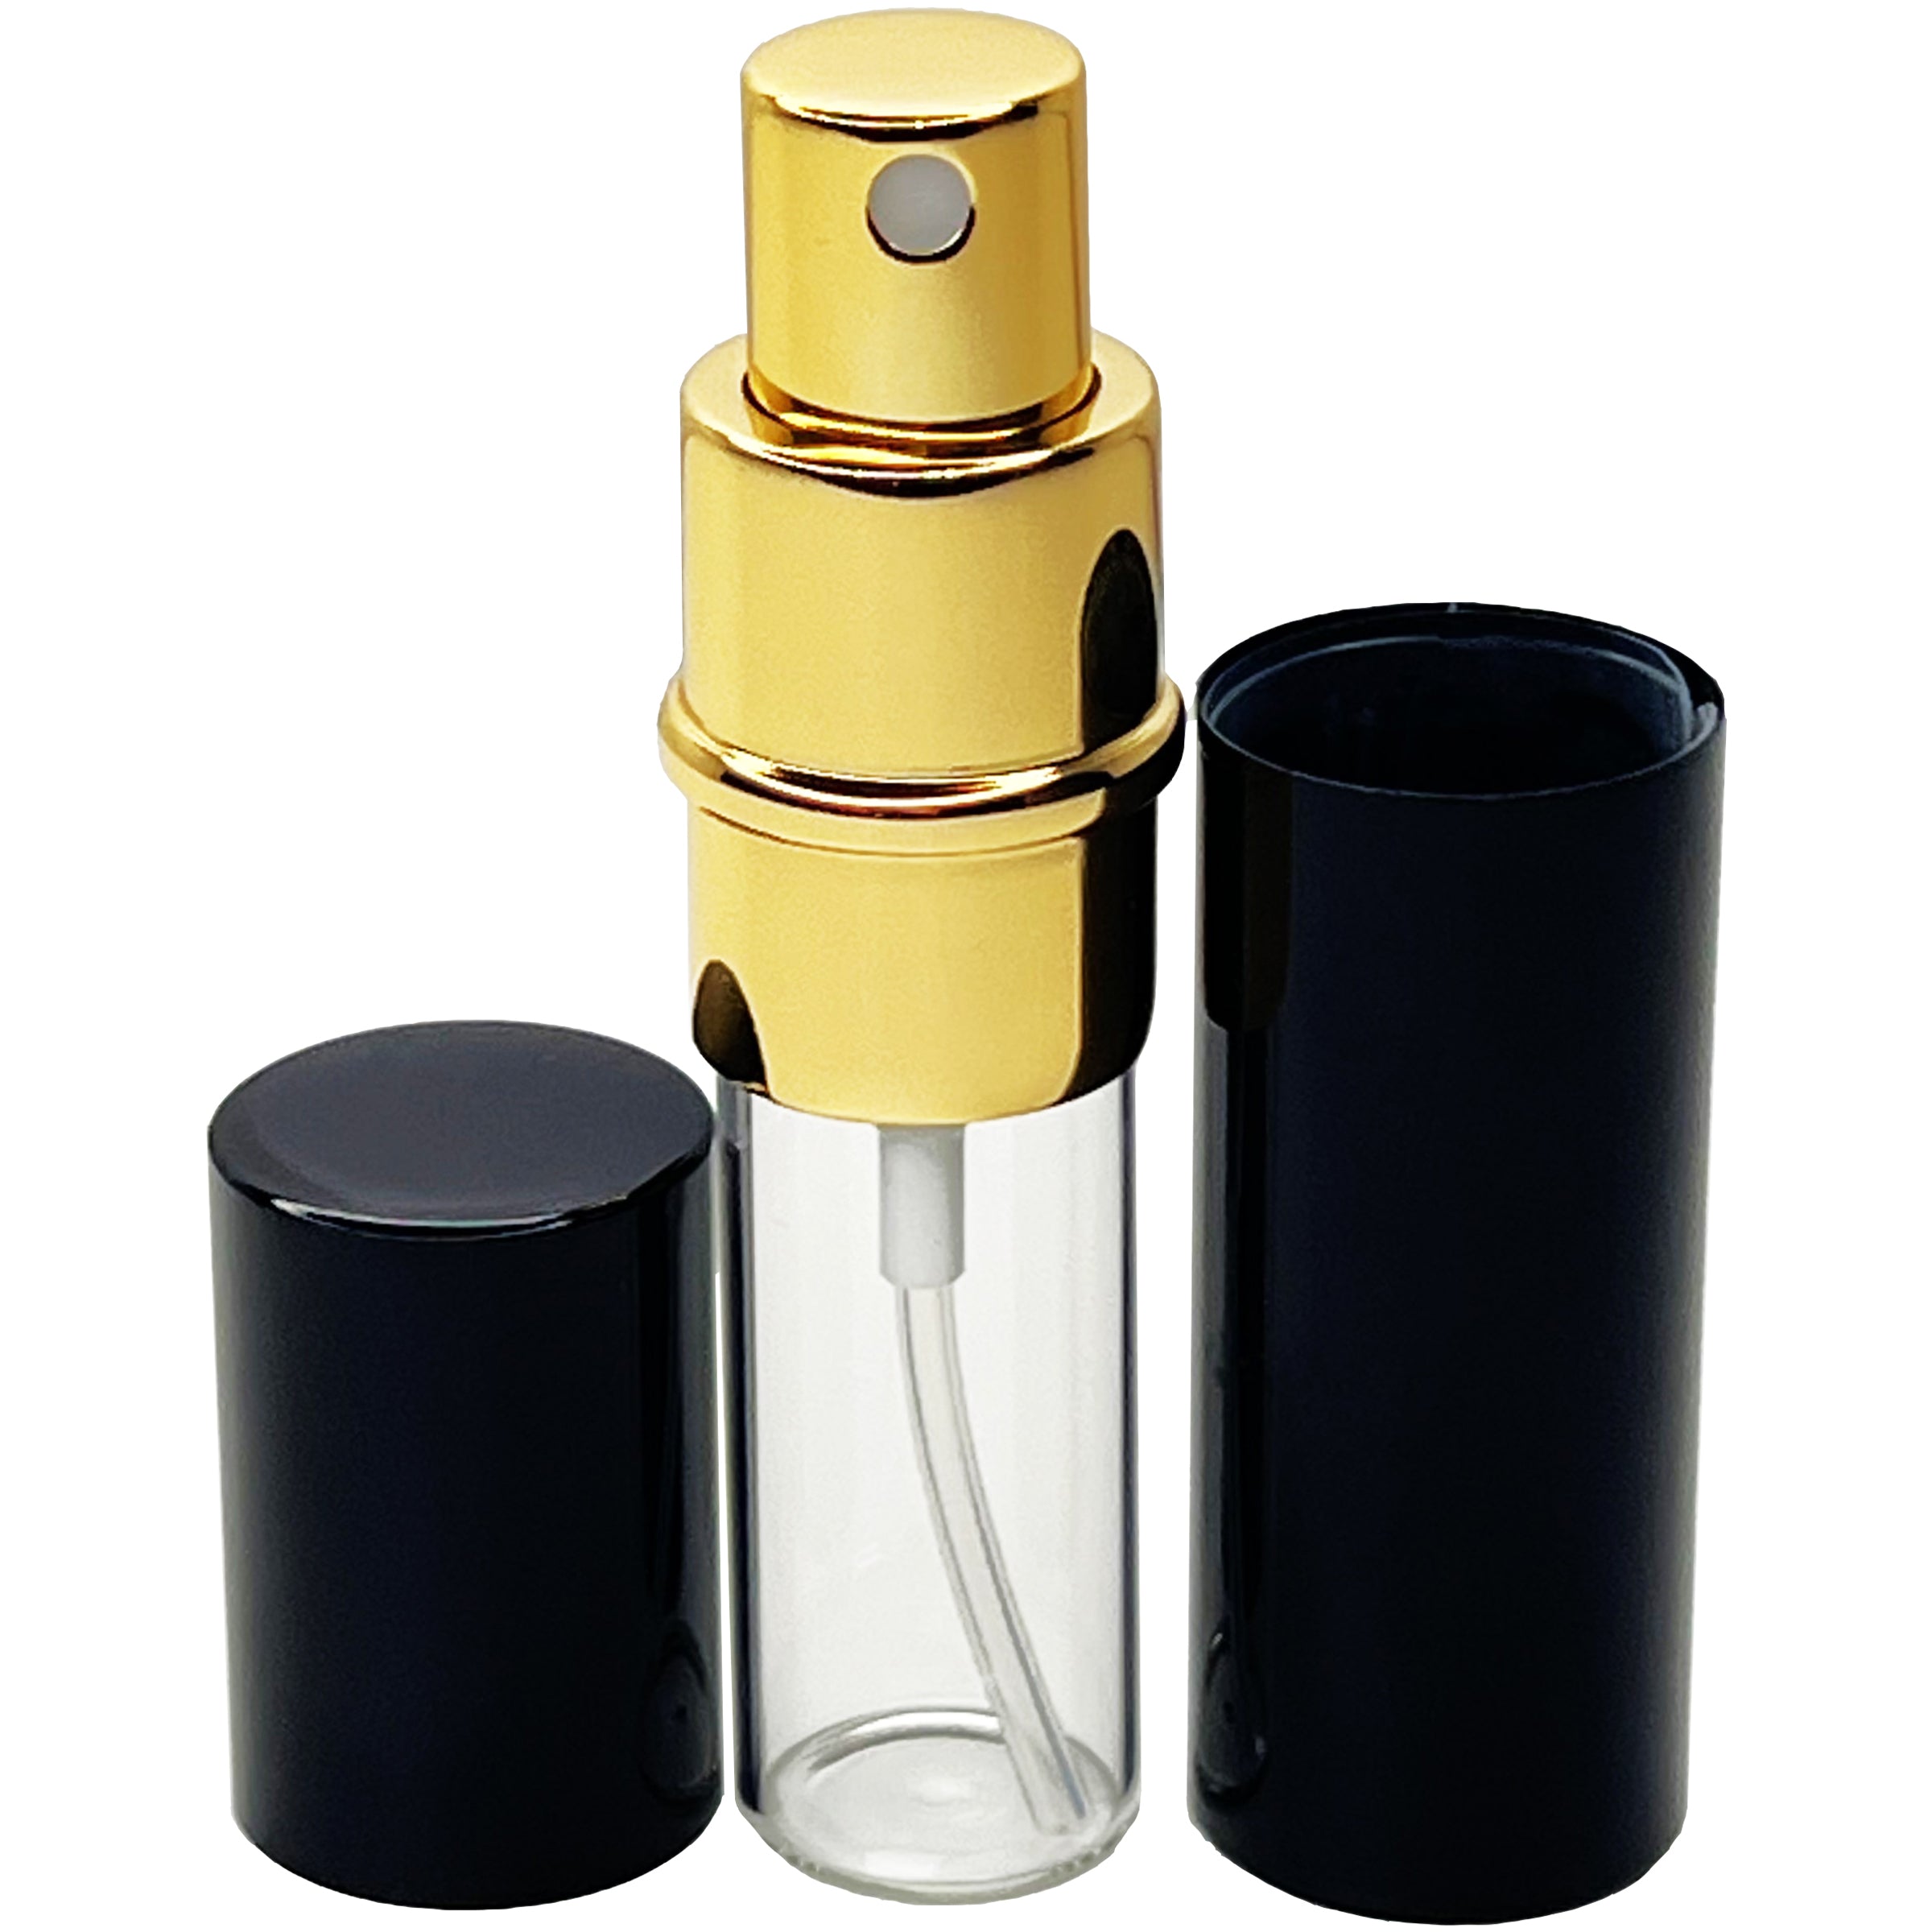 10ml 0.33oz high end aluminum shell glass perfume bottles sprayers